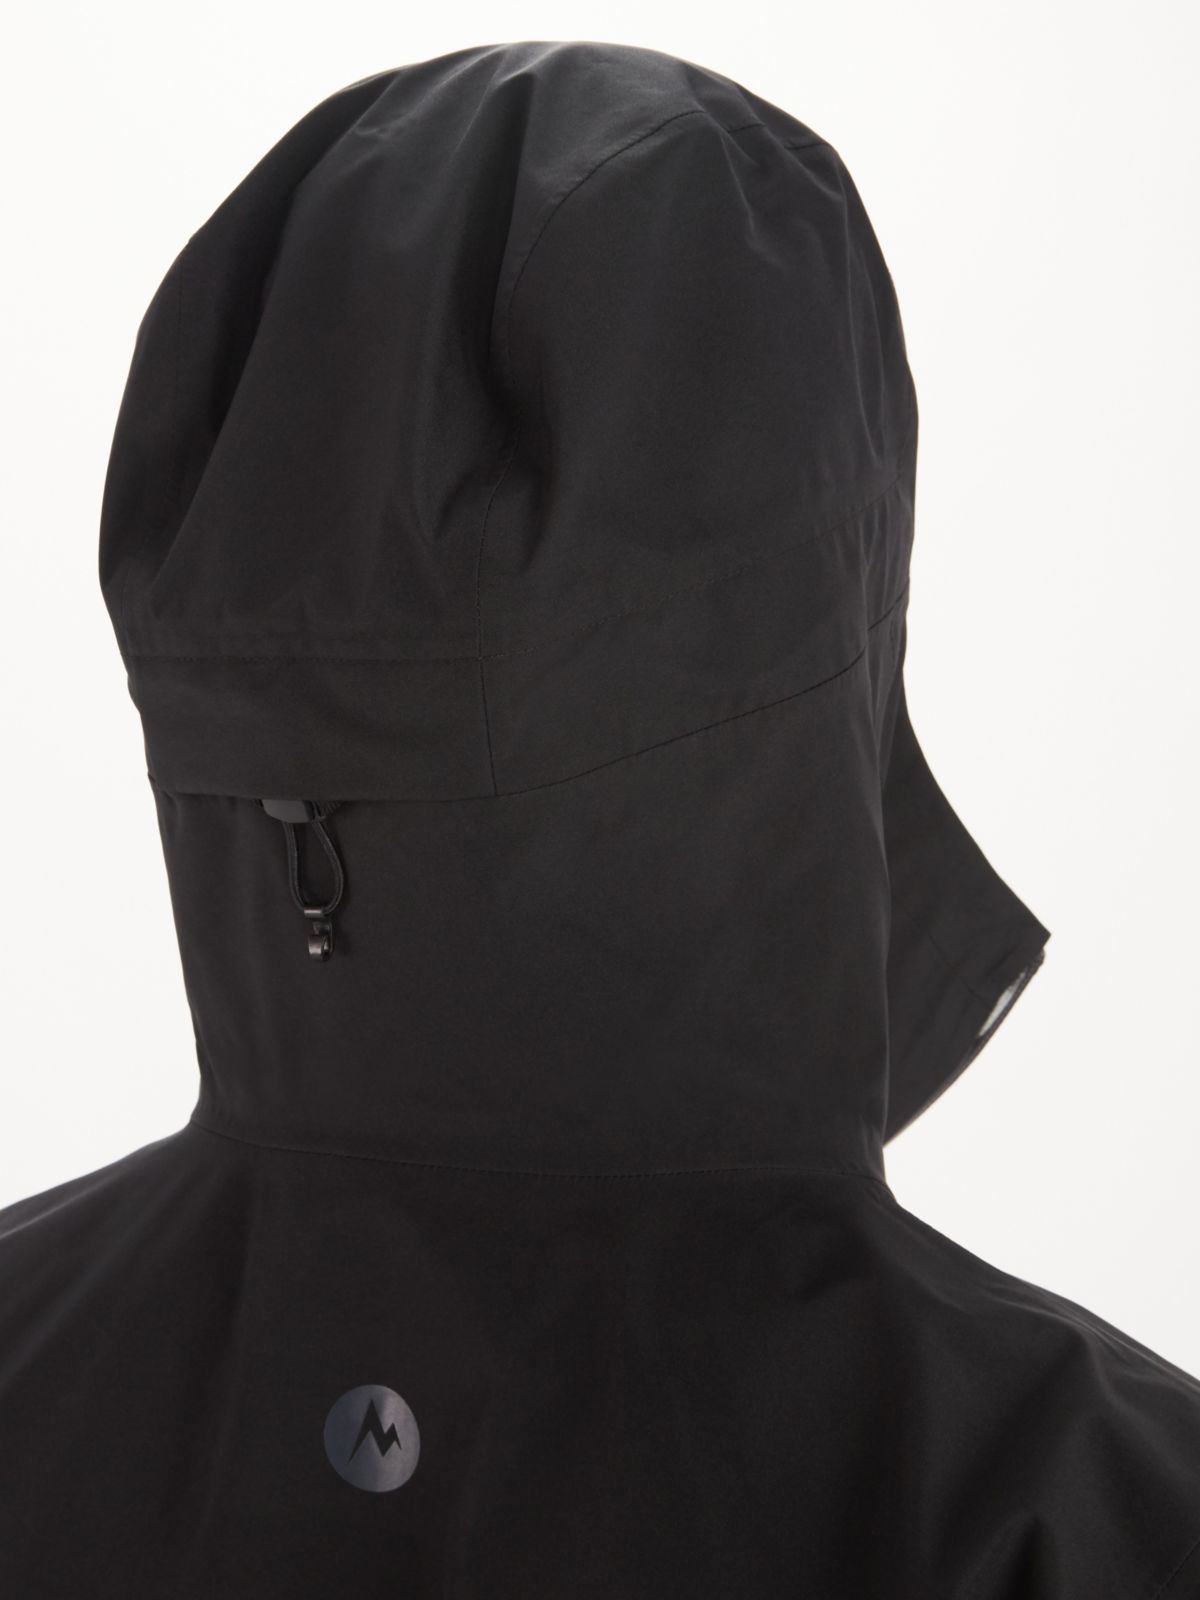 adjustable hood for jacket